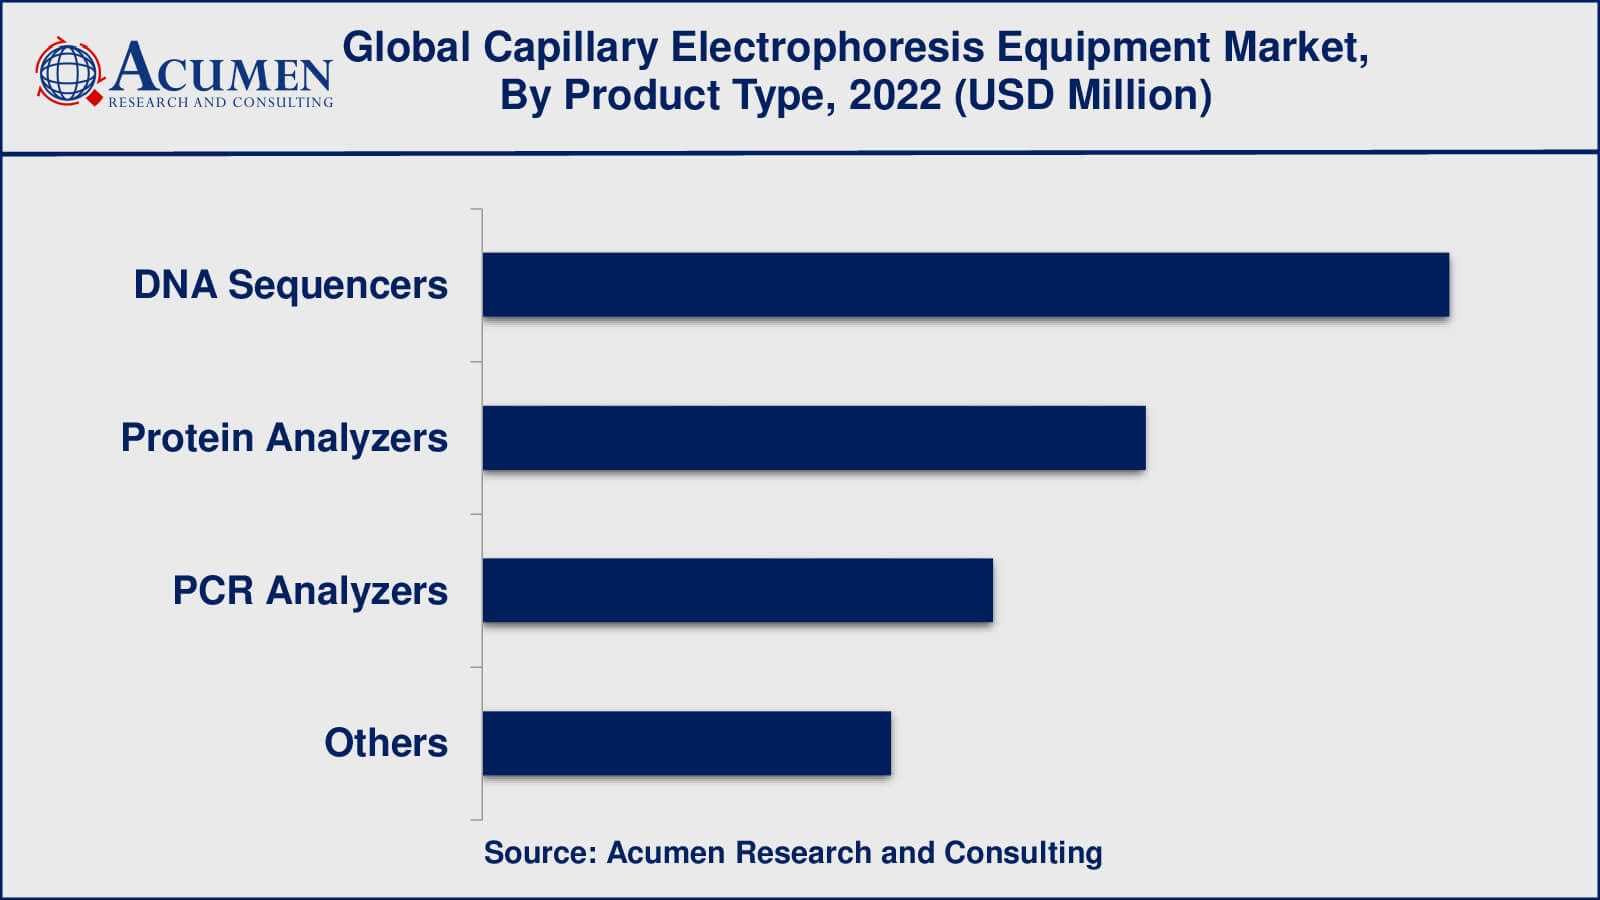 Capillary Electrophoresis Equipment Market Insights